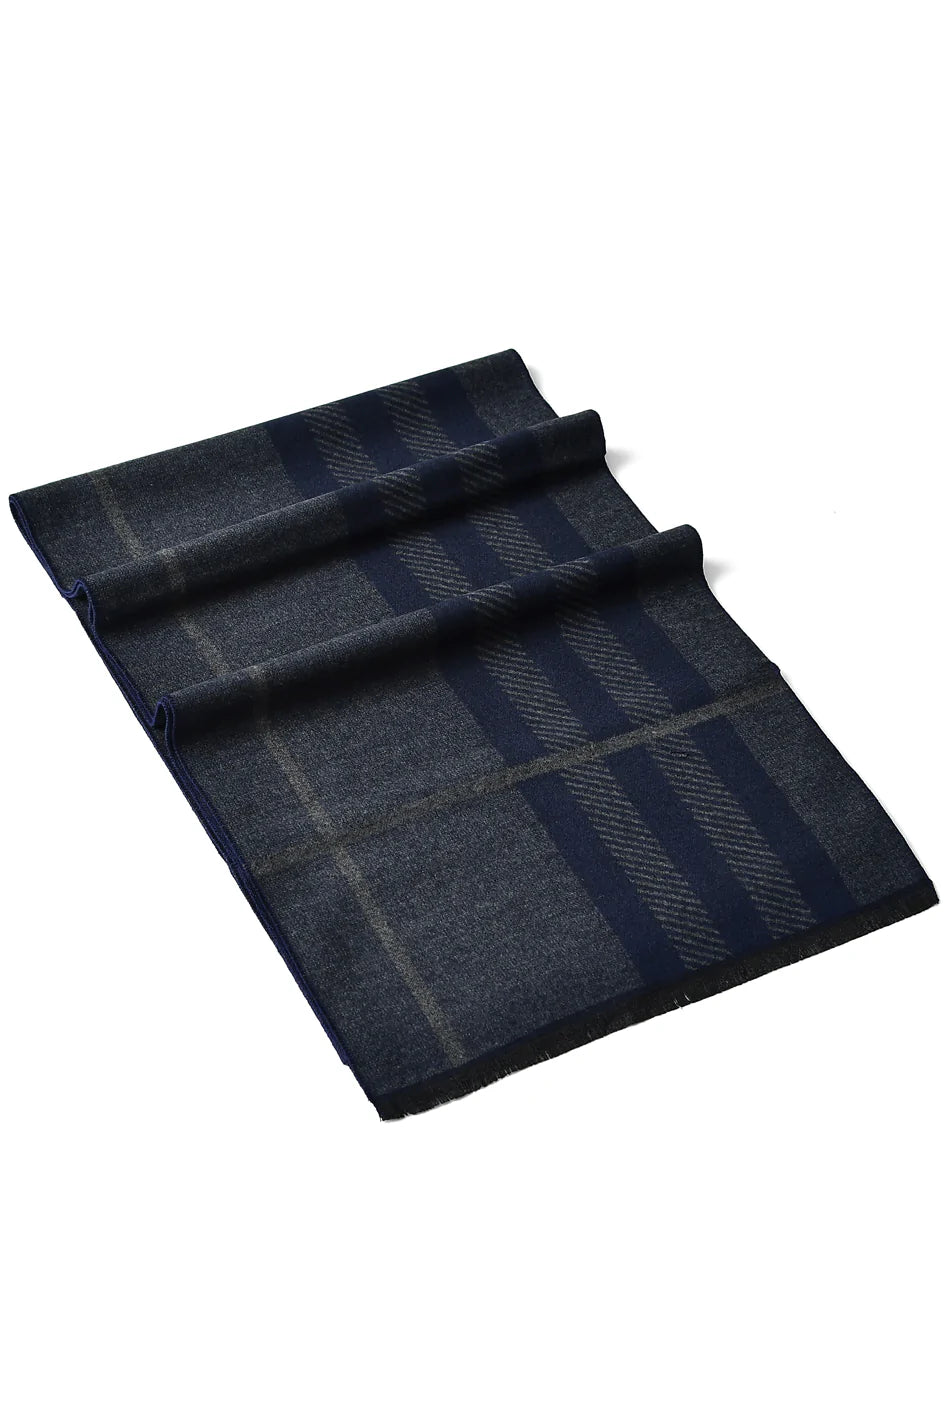 Reversible Stripe / Check Print Frayed Scarf - Navy - Oxford Blue